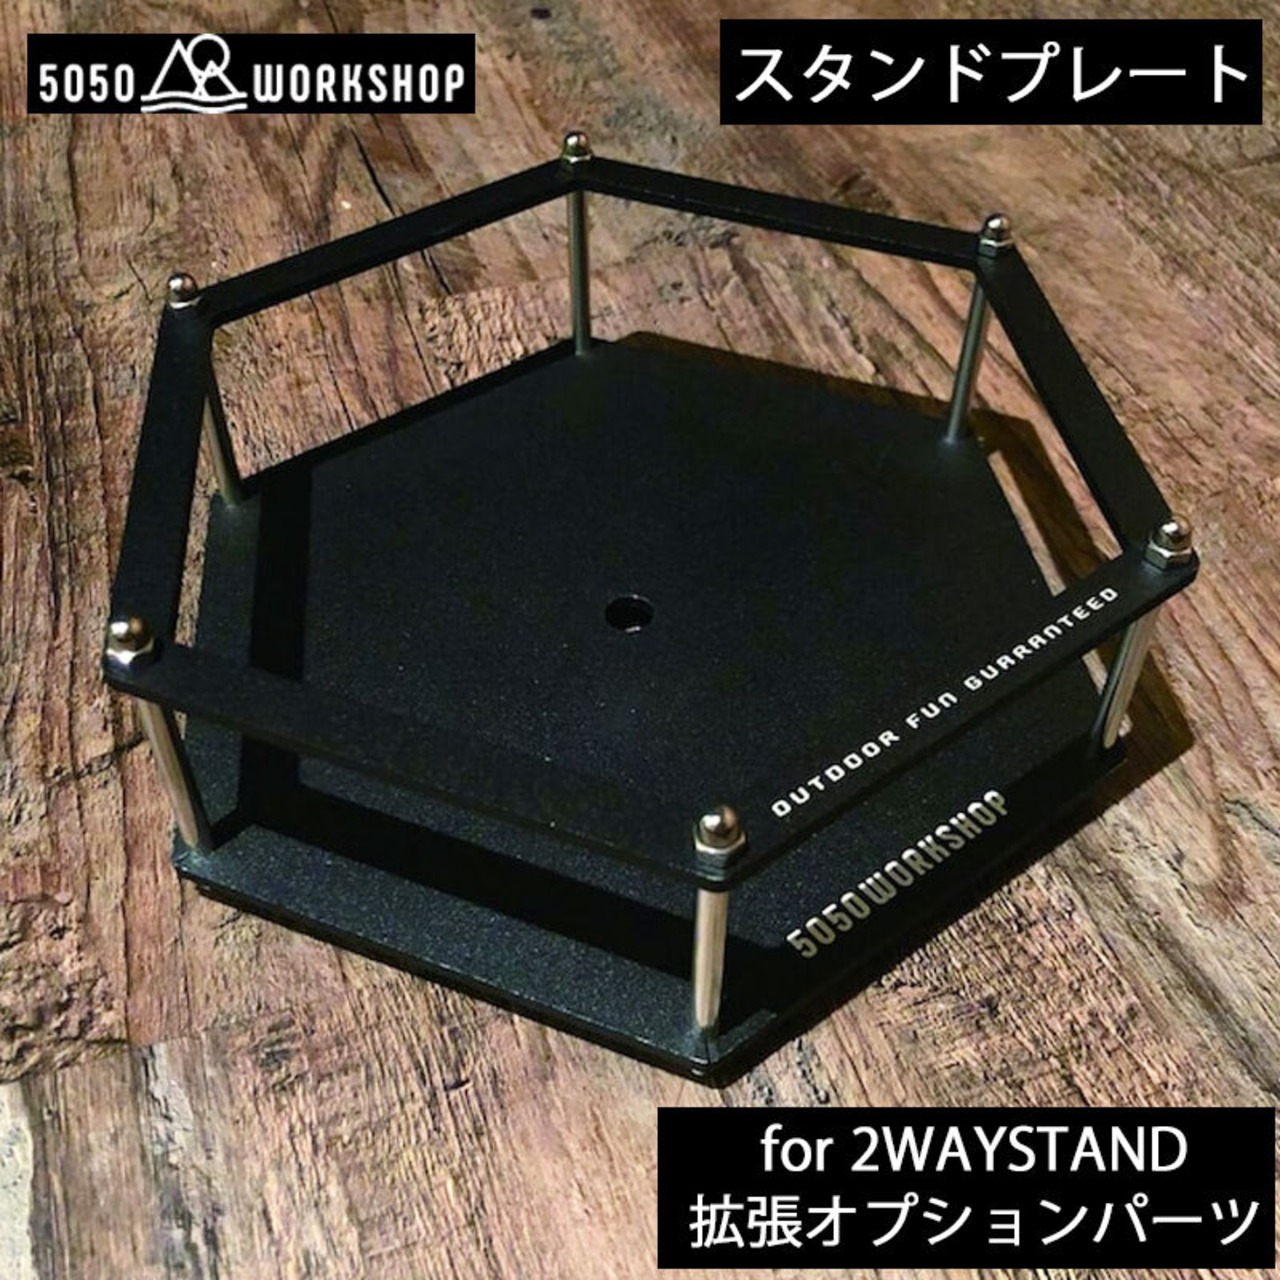 5050WORKSHOP (5050ワークショップ) STAND PLATE for 2WAY STAND 拡張オプションパーツ スタンドプレート